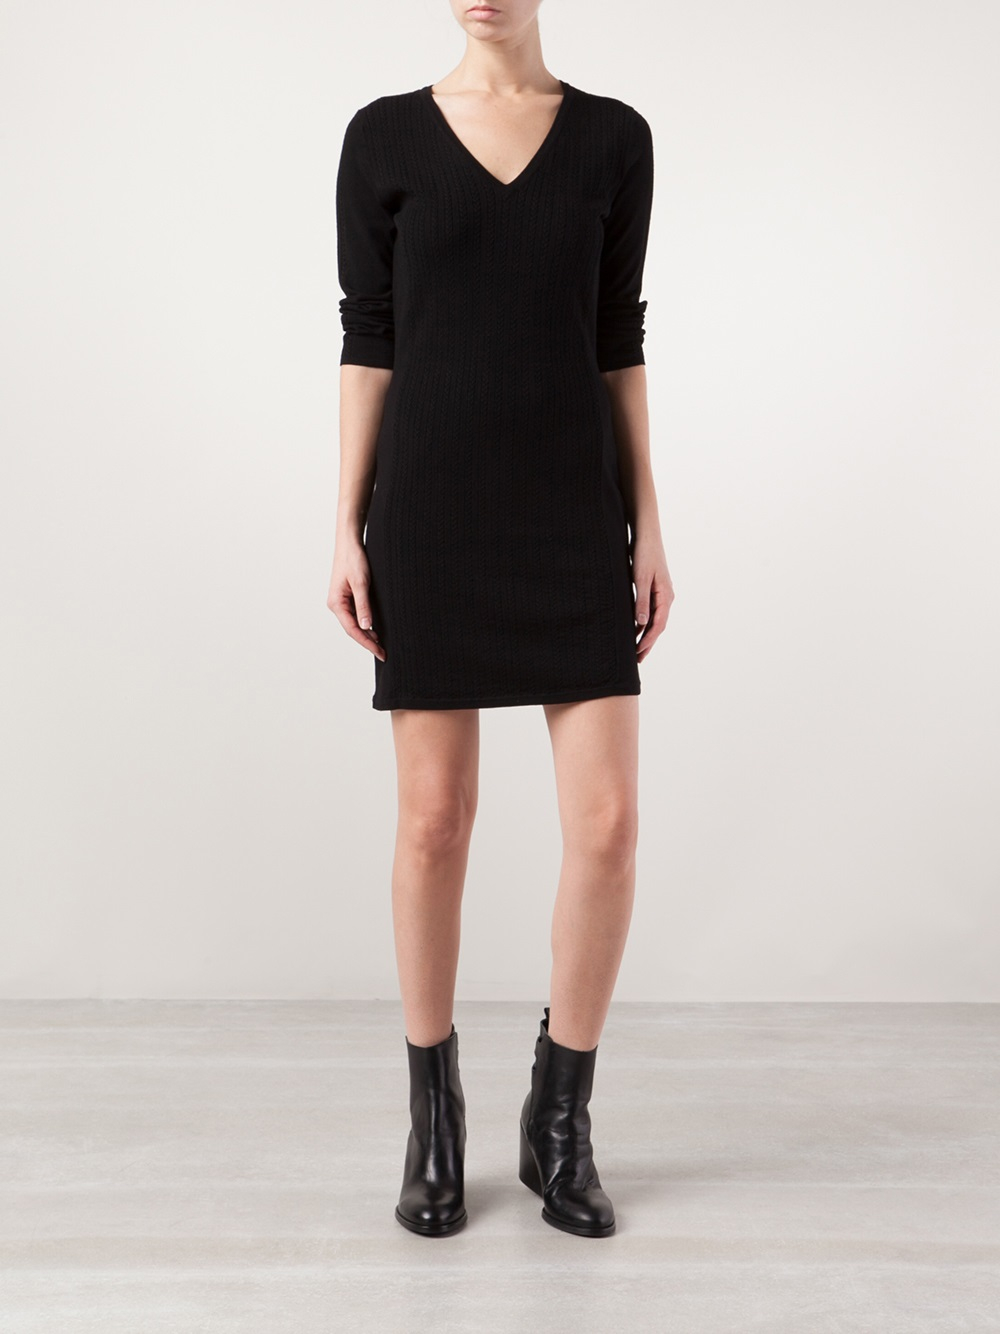 Lyst - Rag & Bone Fitted Sweater Dress in Black